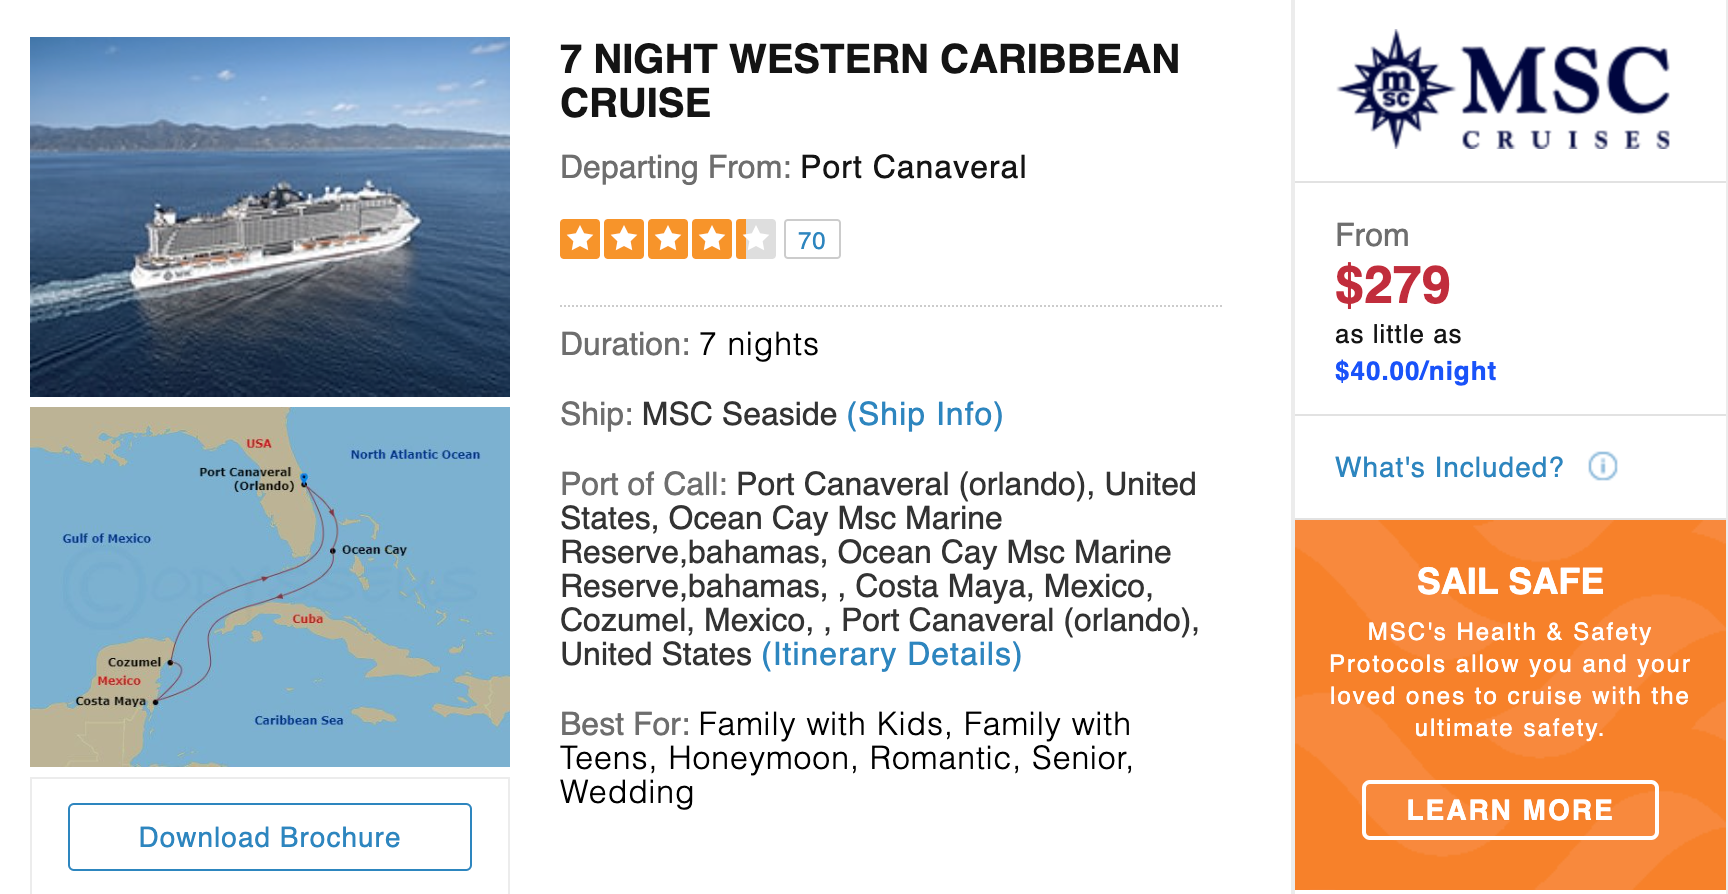 7 Night Western Caribbean Cruise Deal